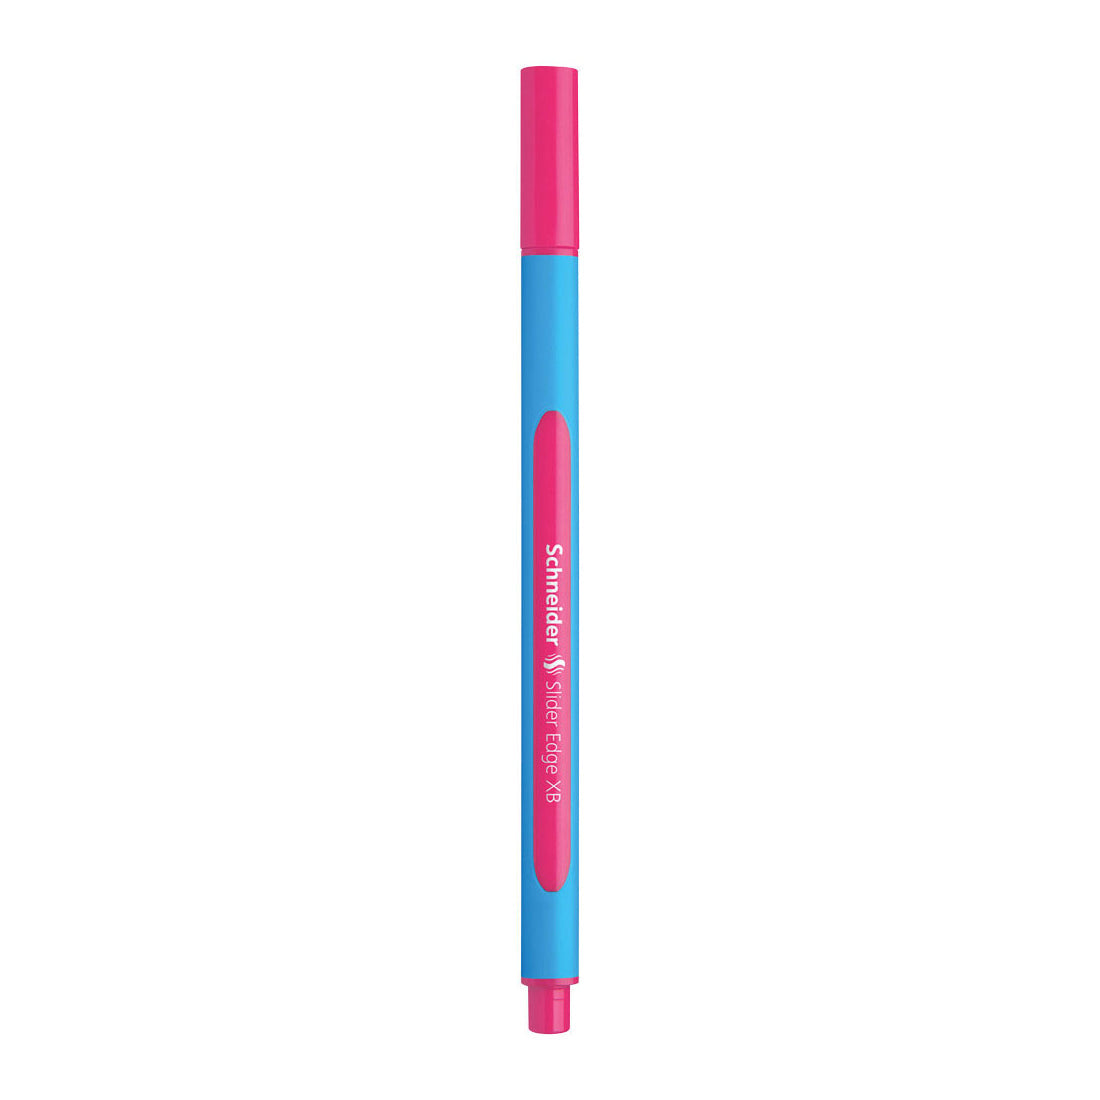 Edge Ballpoint Pen XB, Box of 10#ink-colour_pink